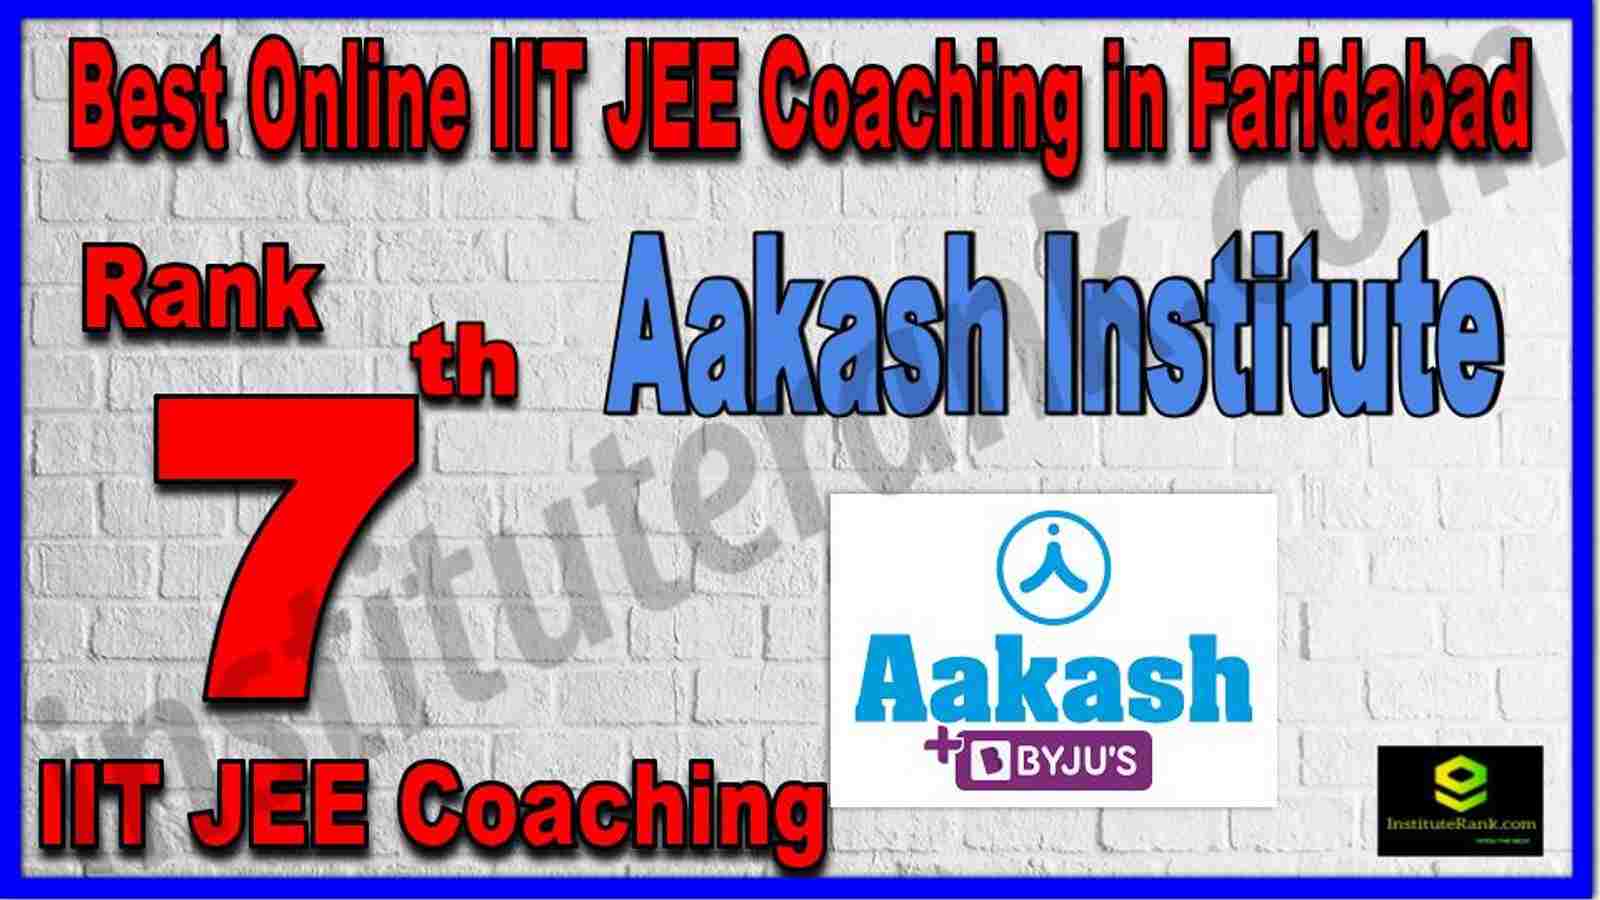 Rank 7th Best Online IIT JEE Coaching in Faridabad